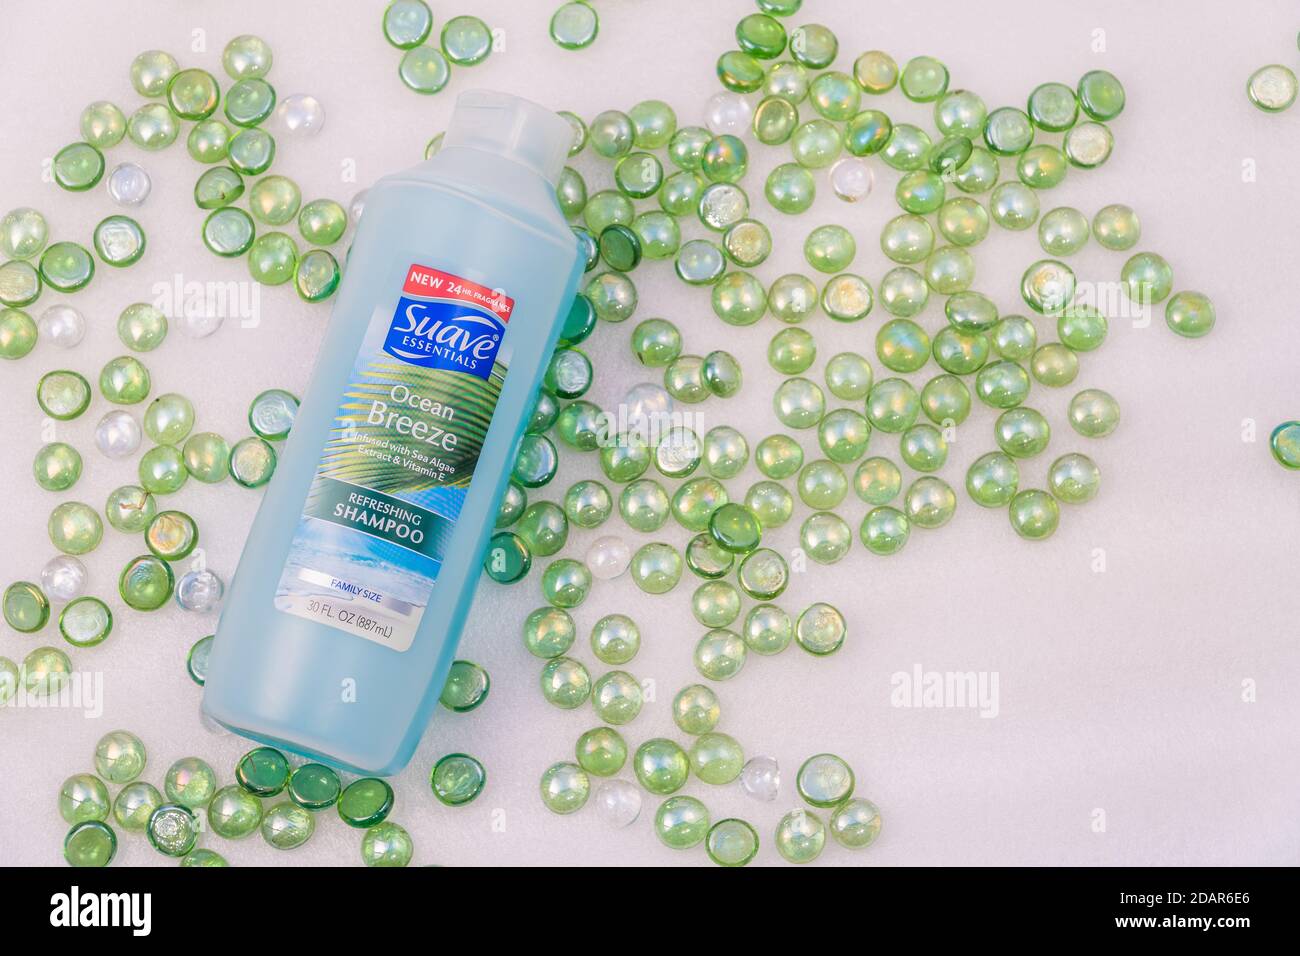 Suave shampoo Stock Photo